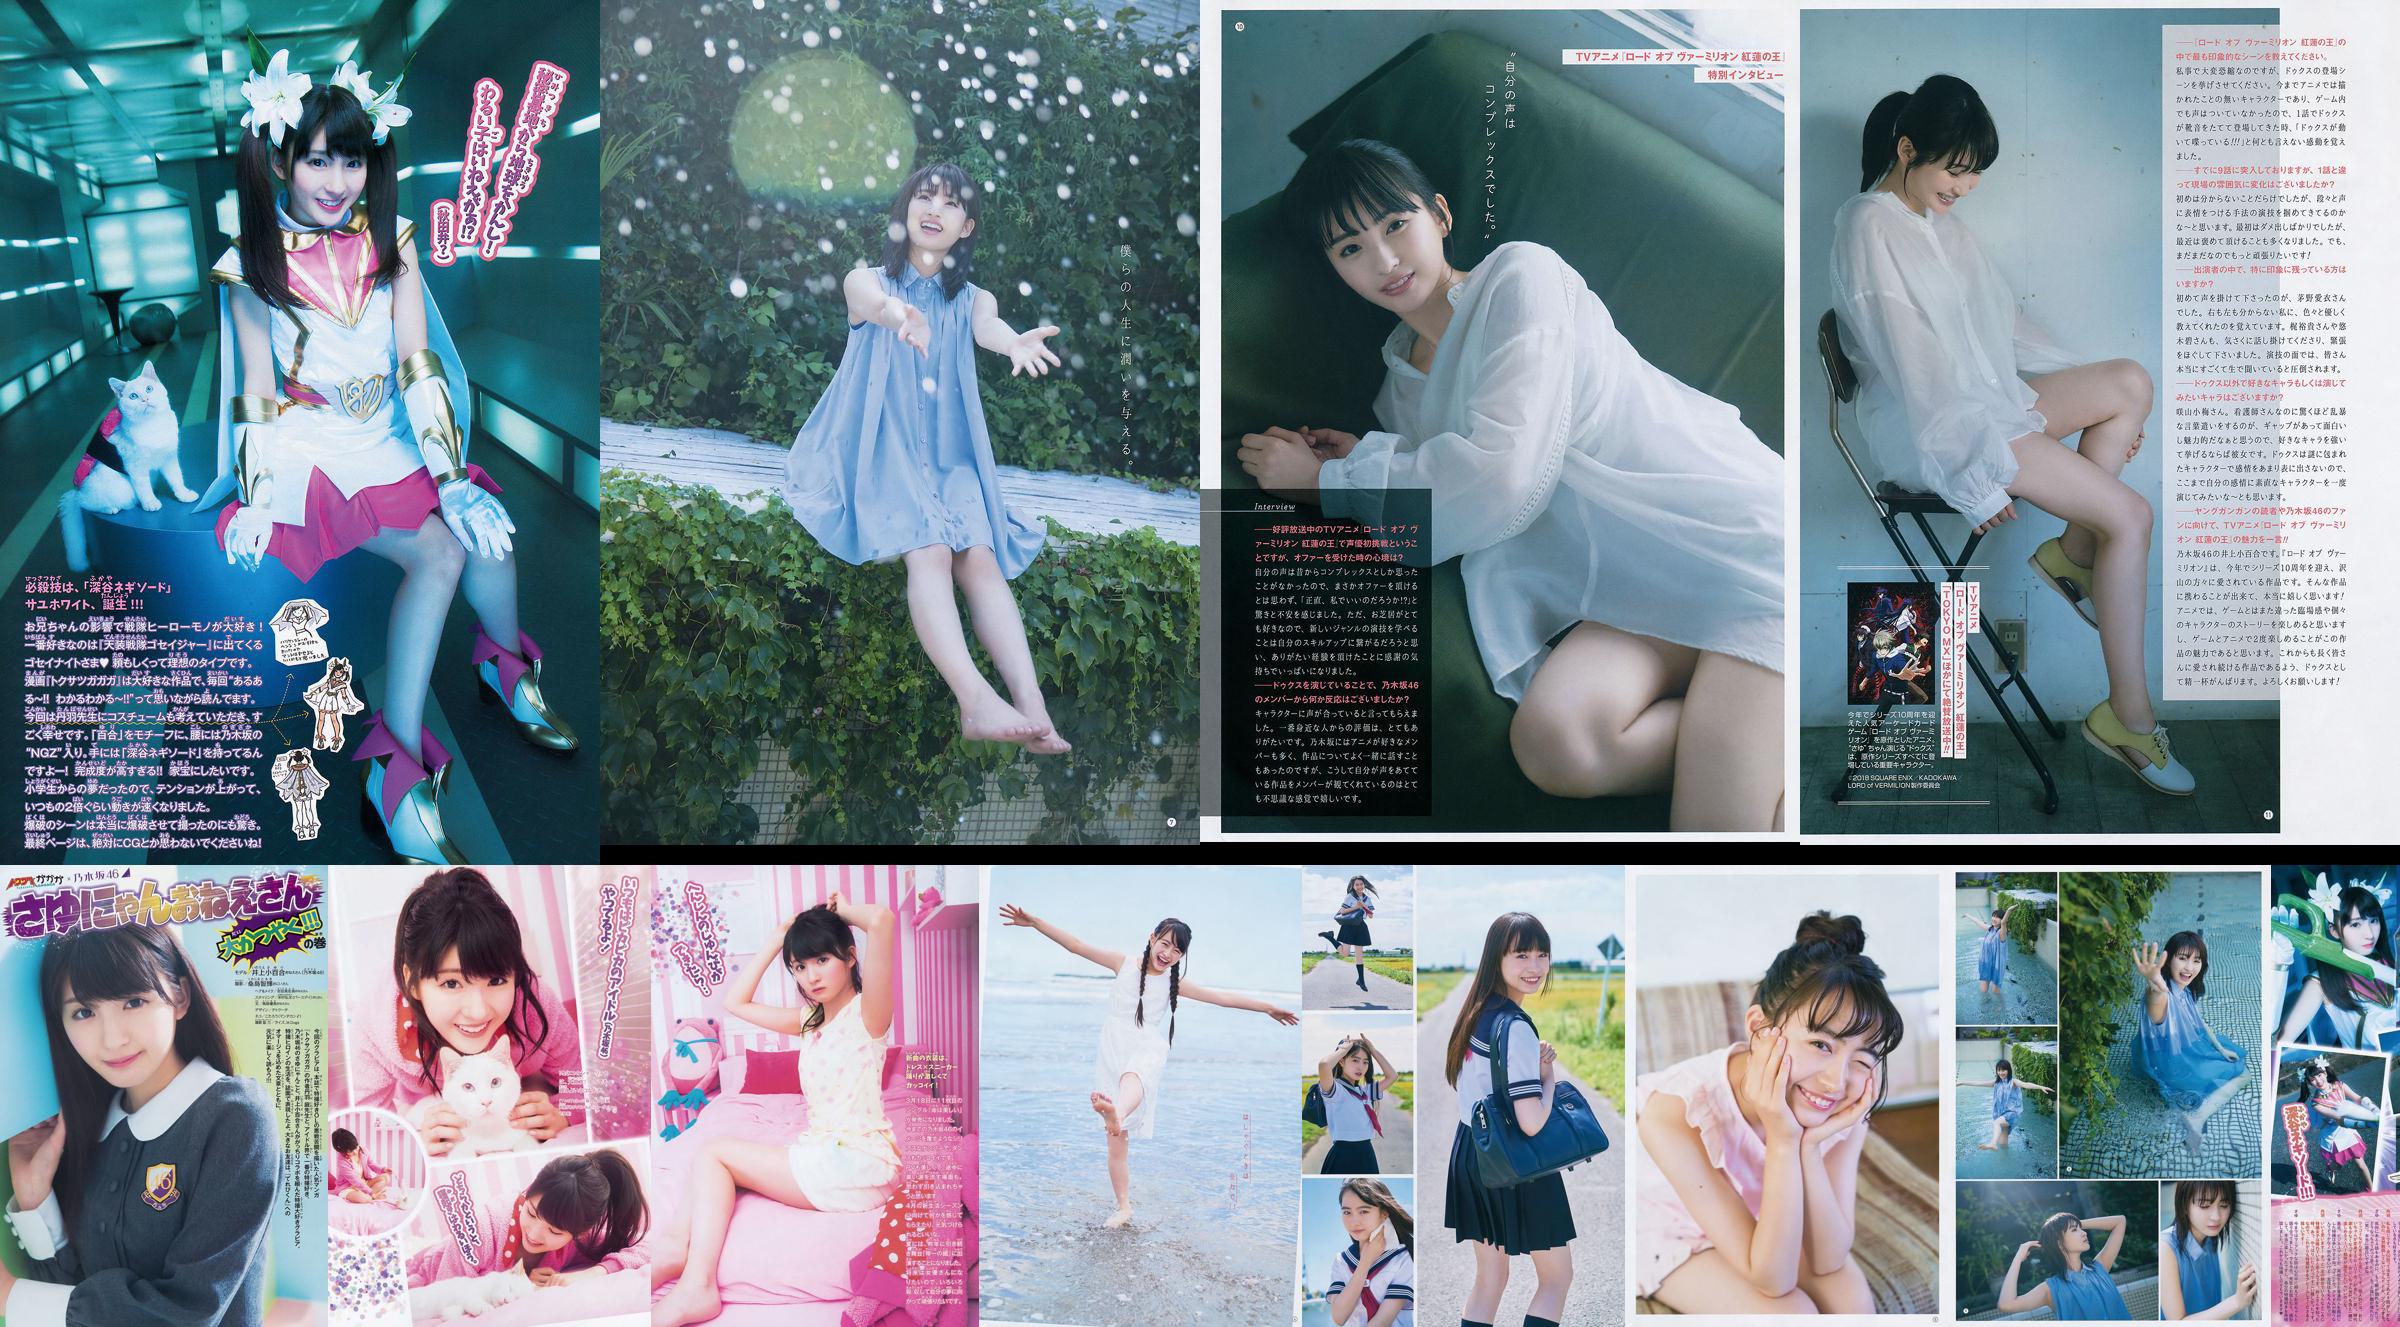 [Young Gangan] Sayuri Inoue Sua areia original 2018 No.18 Photo Magazine No.09b03f Página 1